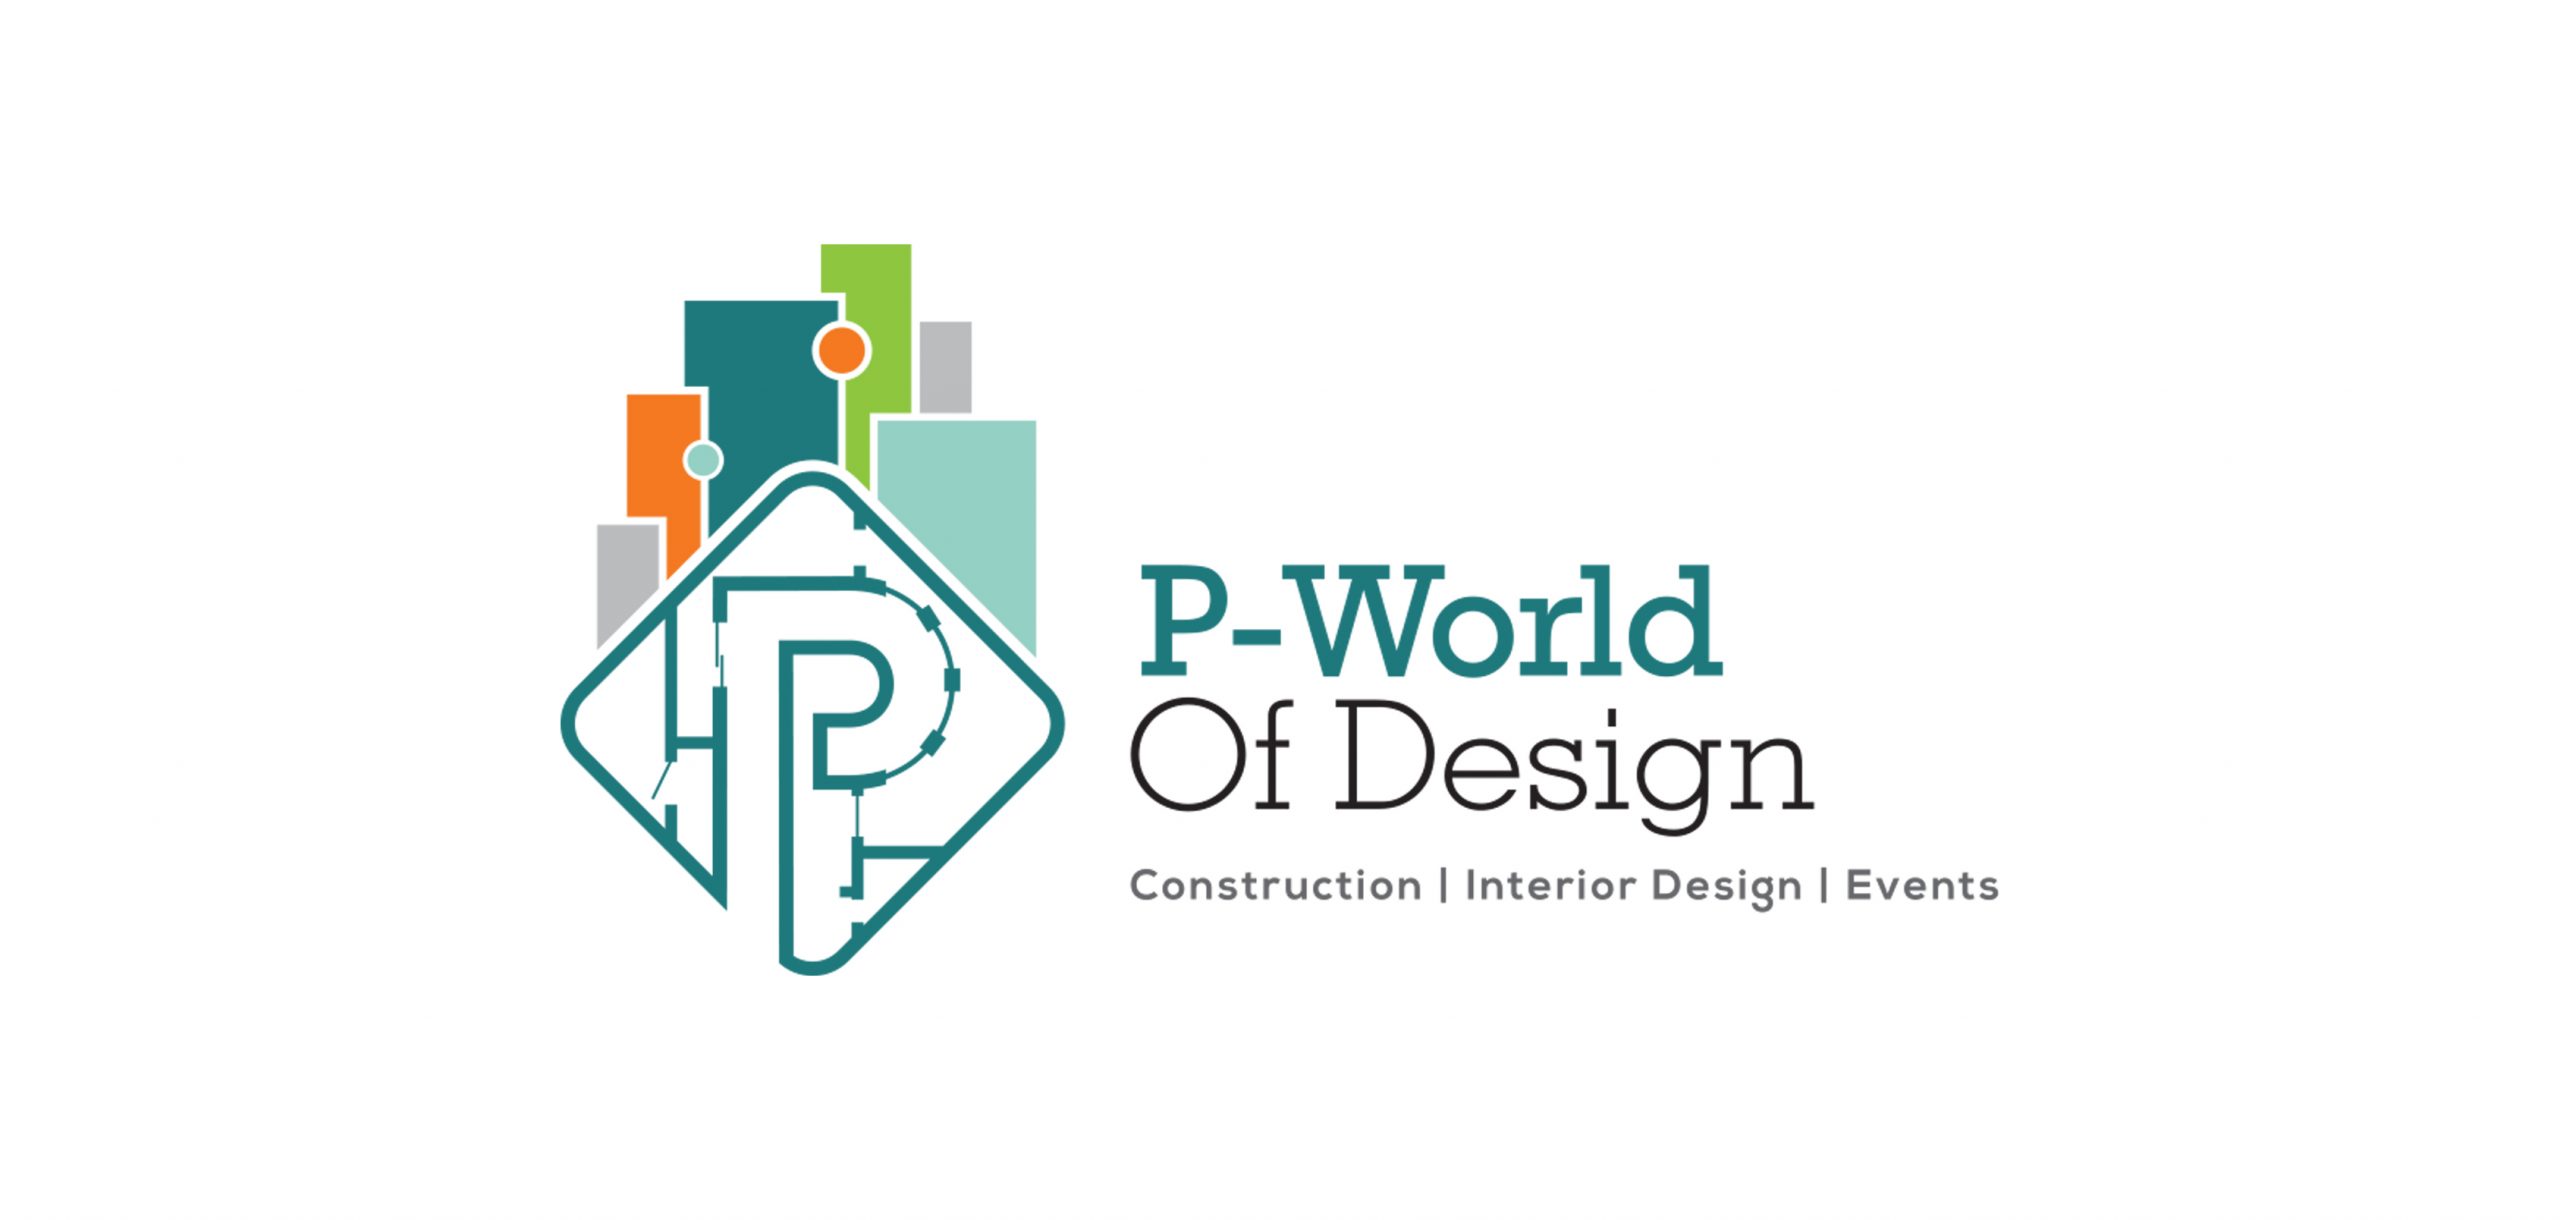 P- World of Design